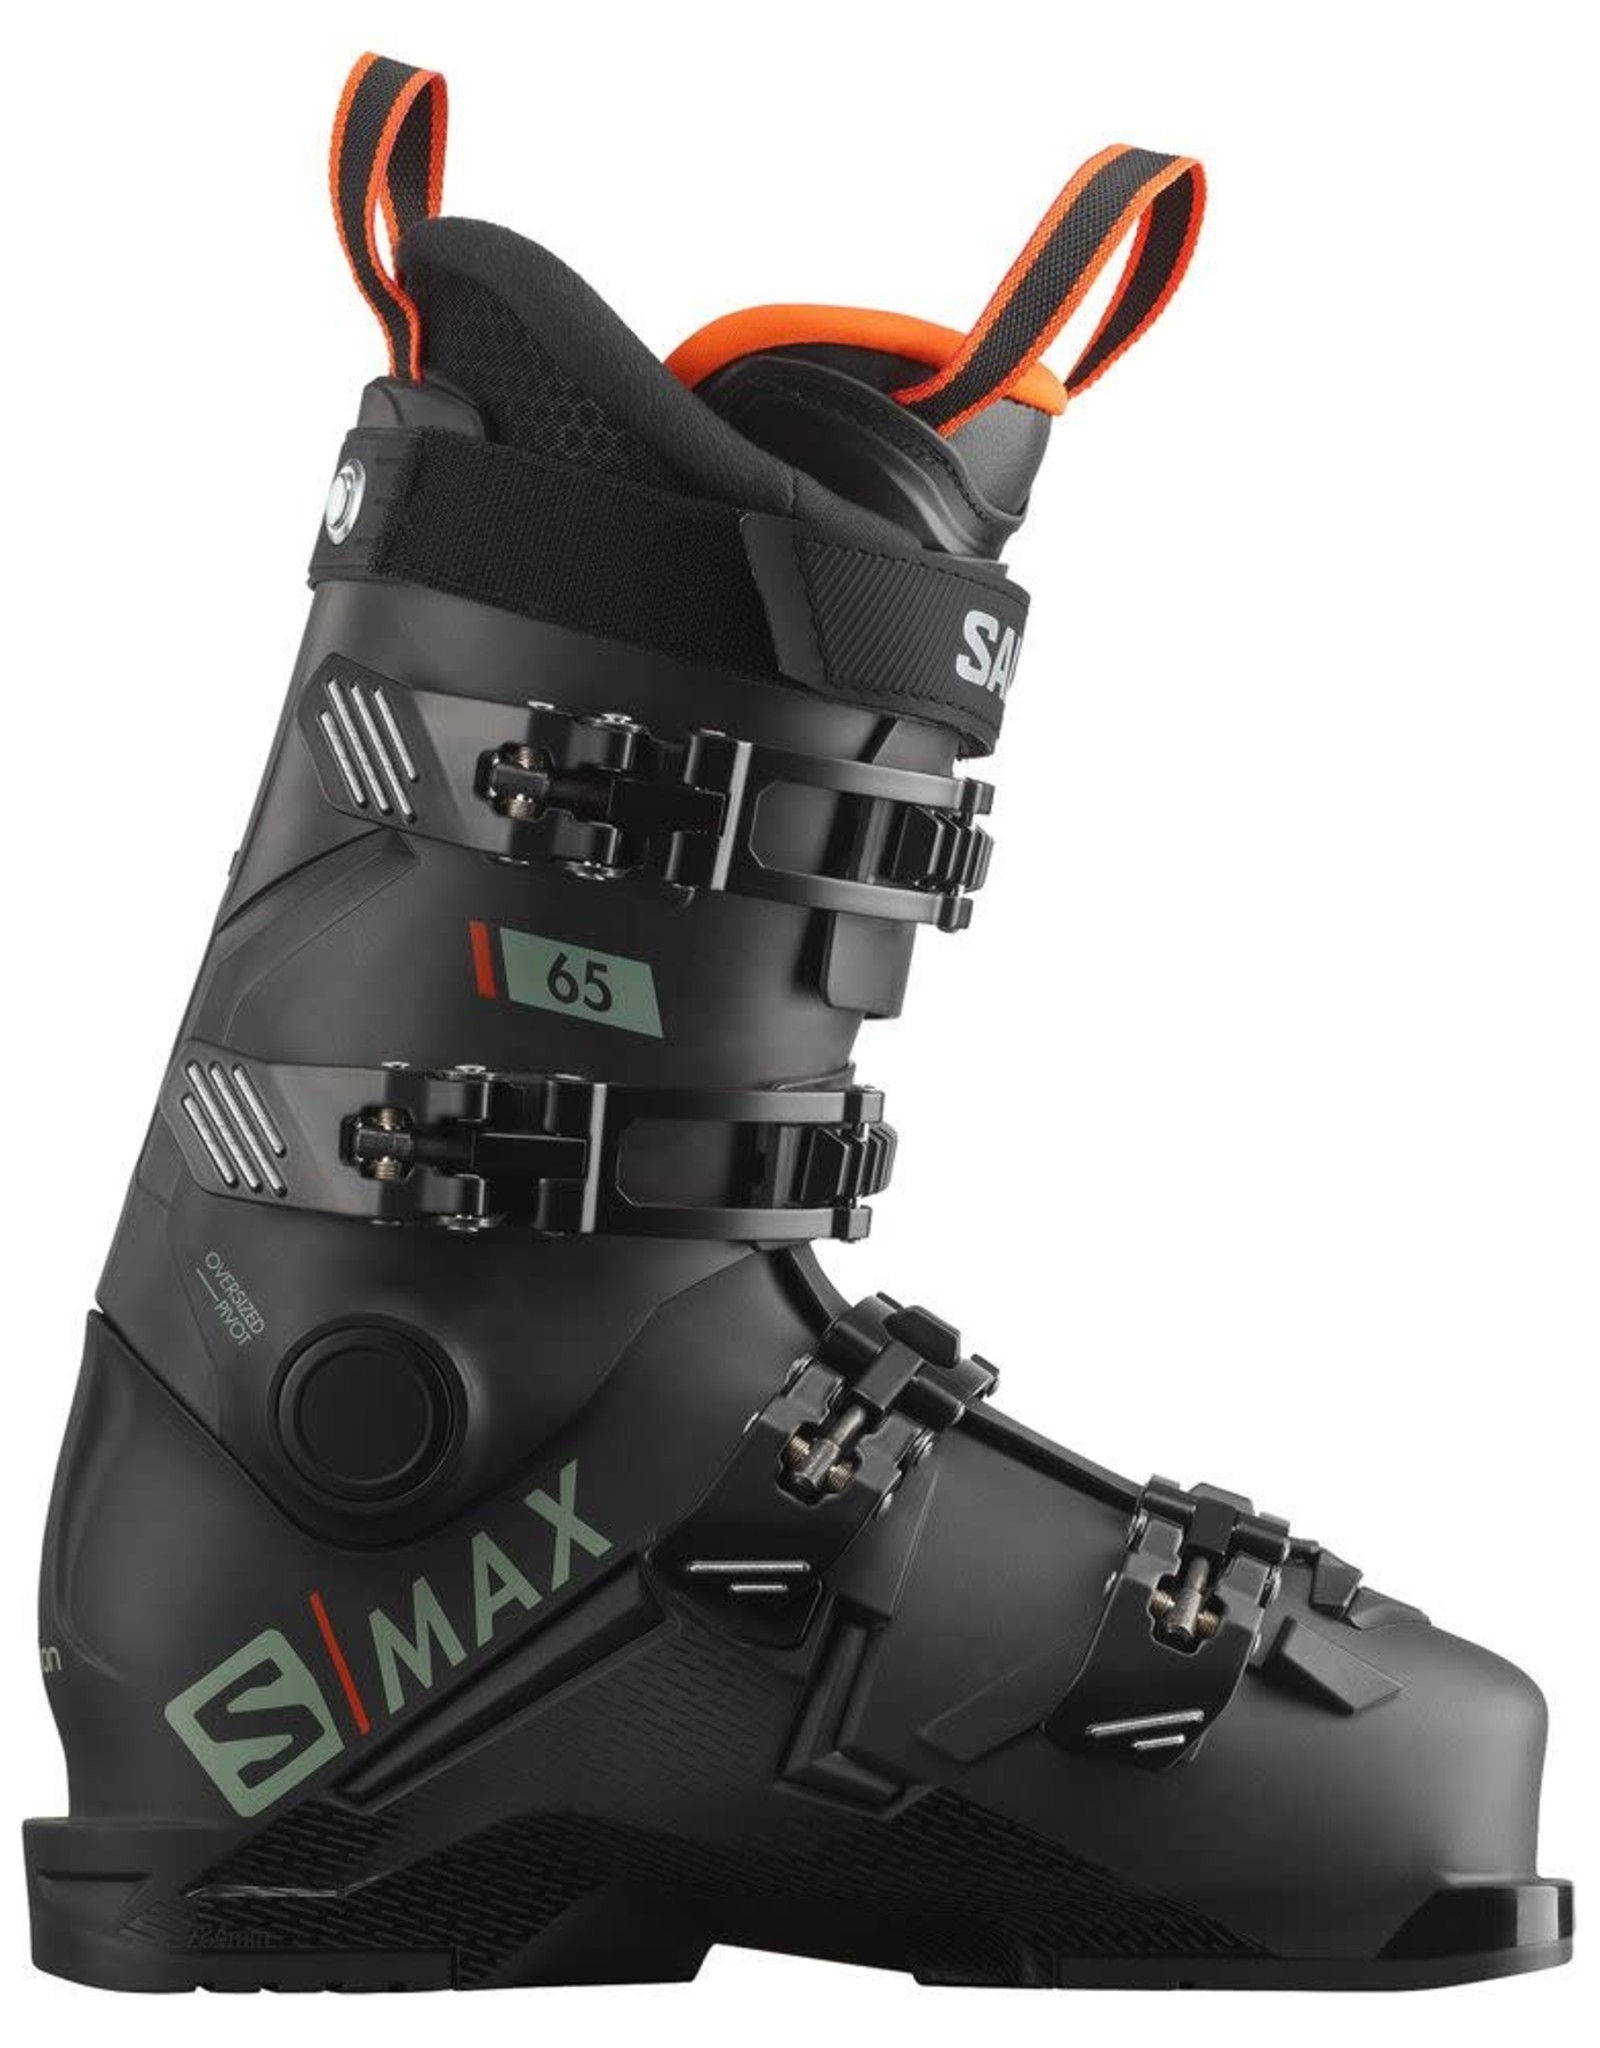 Regulatie strip beweeglijkheid SALOMON Ski Boots S/MAX 65 (22/23) - Alpine Hut